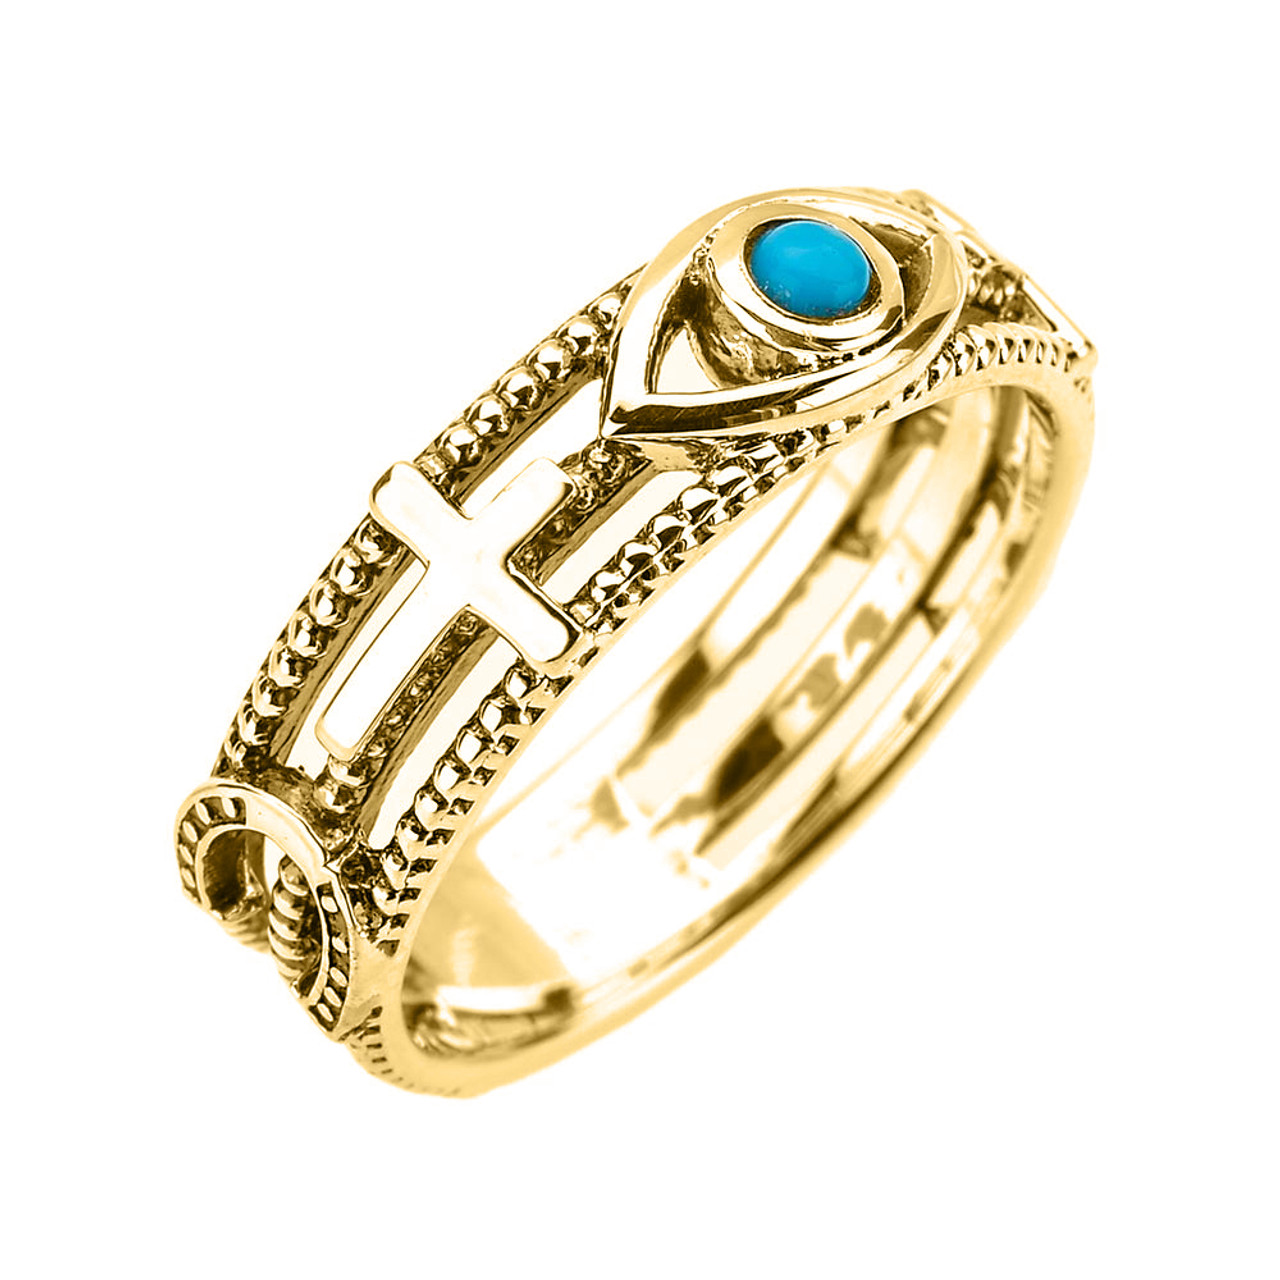 Rowan Wood Ring on Titanium Sleeve | Jewelry by Johan - Jewelry by Johan